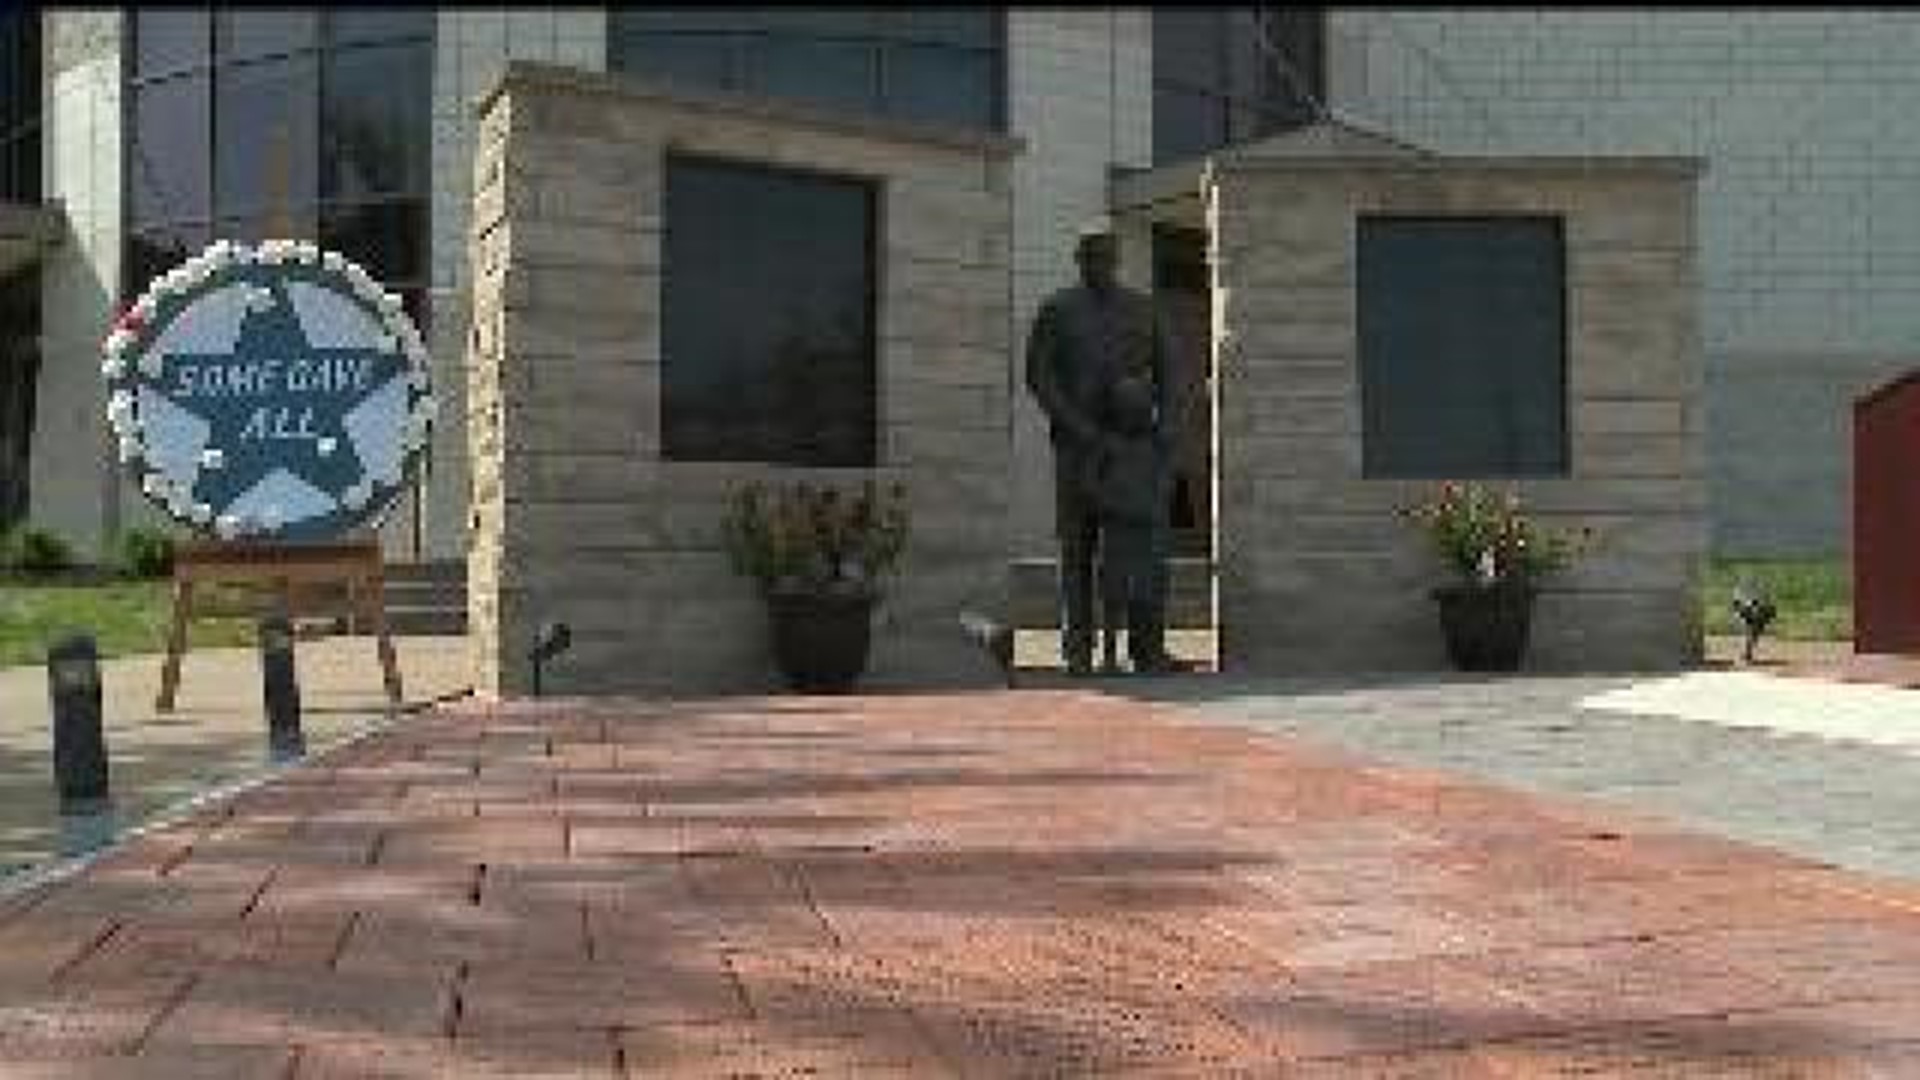 Fallen officers memorial to get upgraded